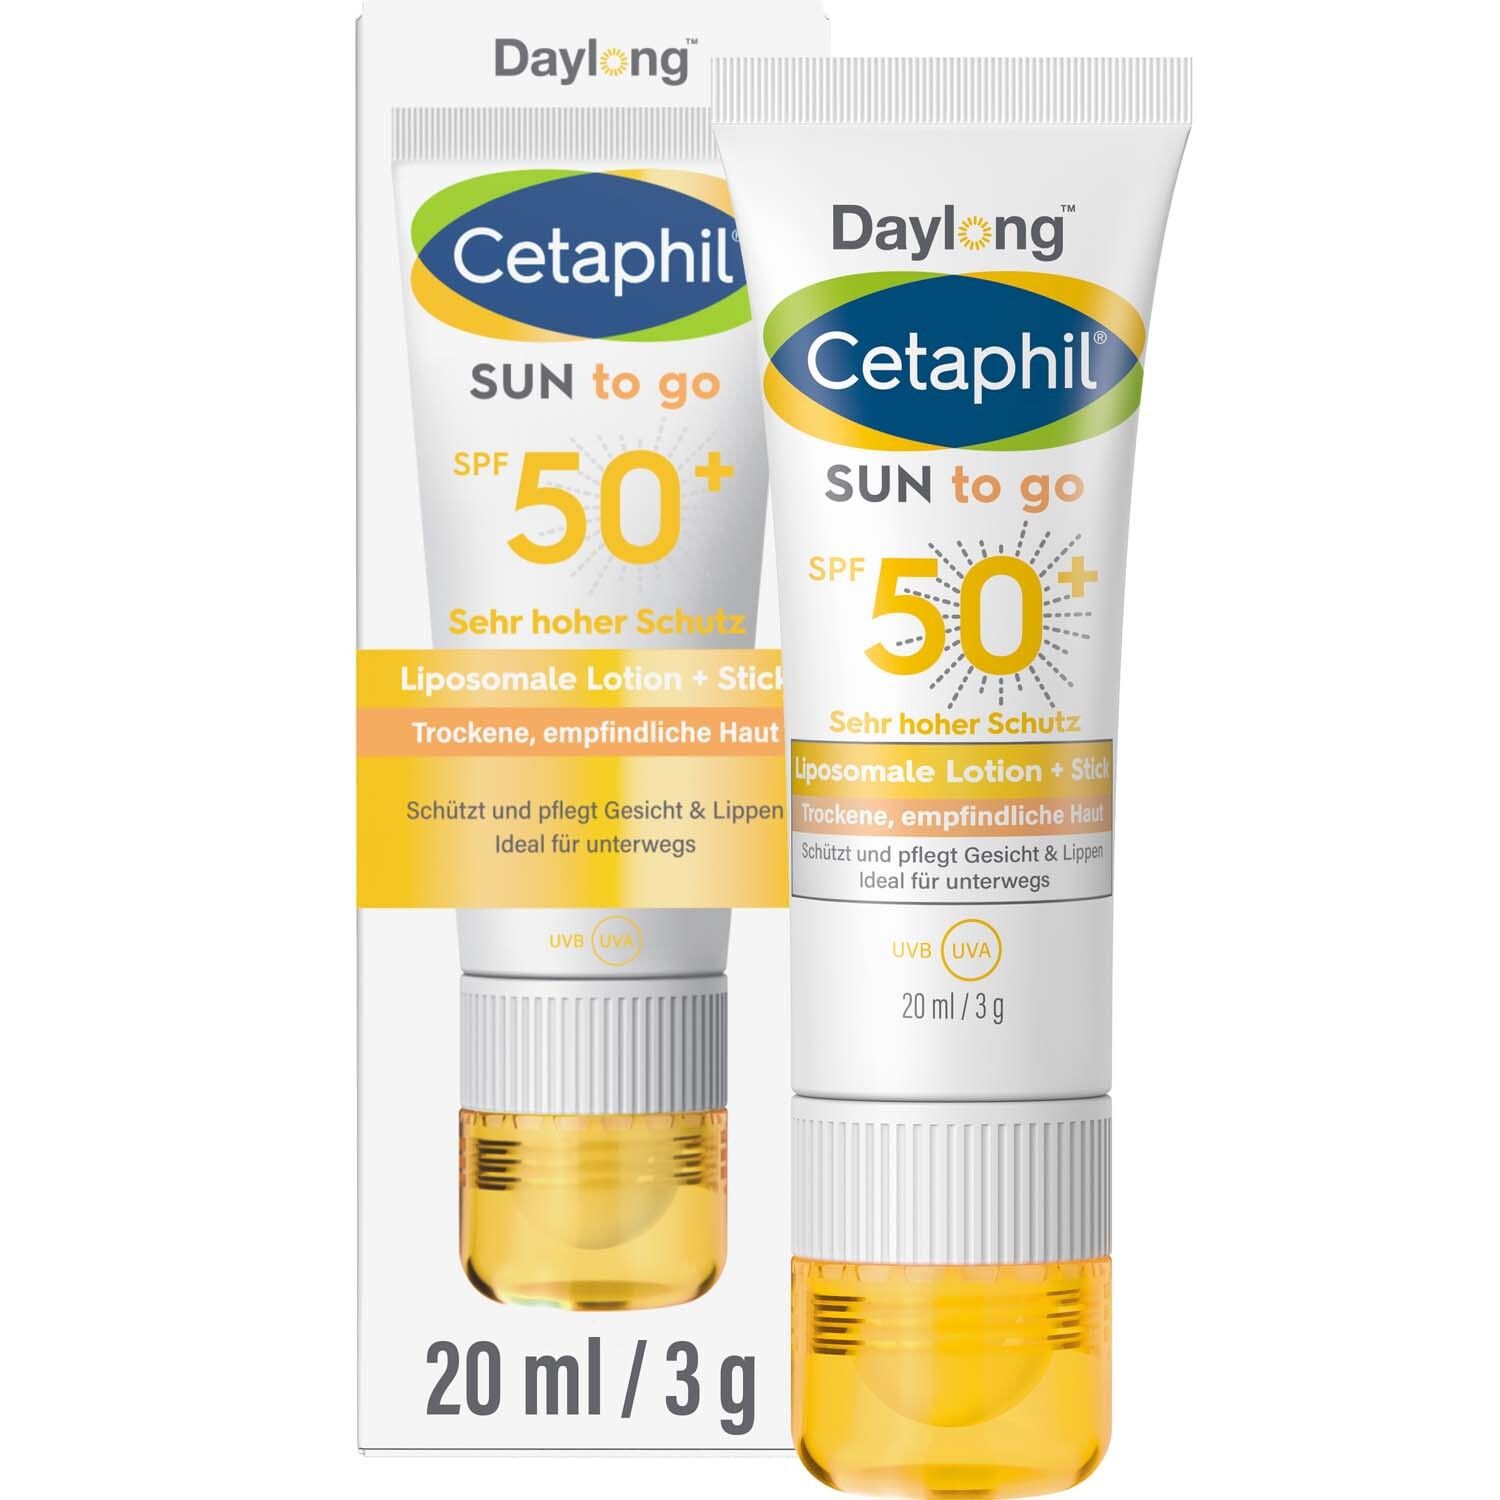 Cetaphil® Sun Daylong™ SPF 50+ Sun to go Lotion + Stick